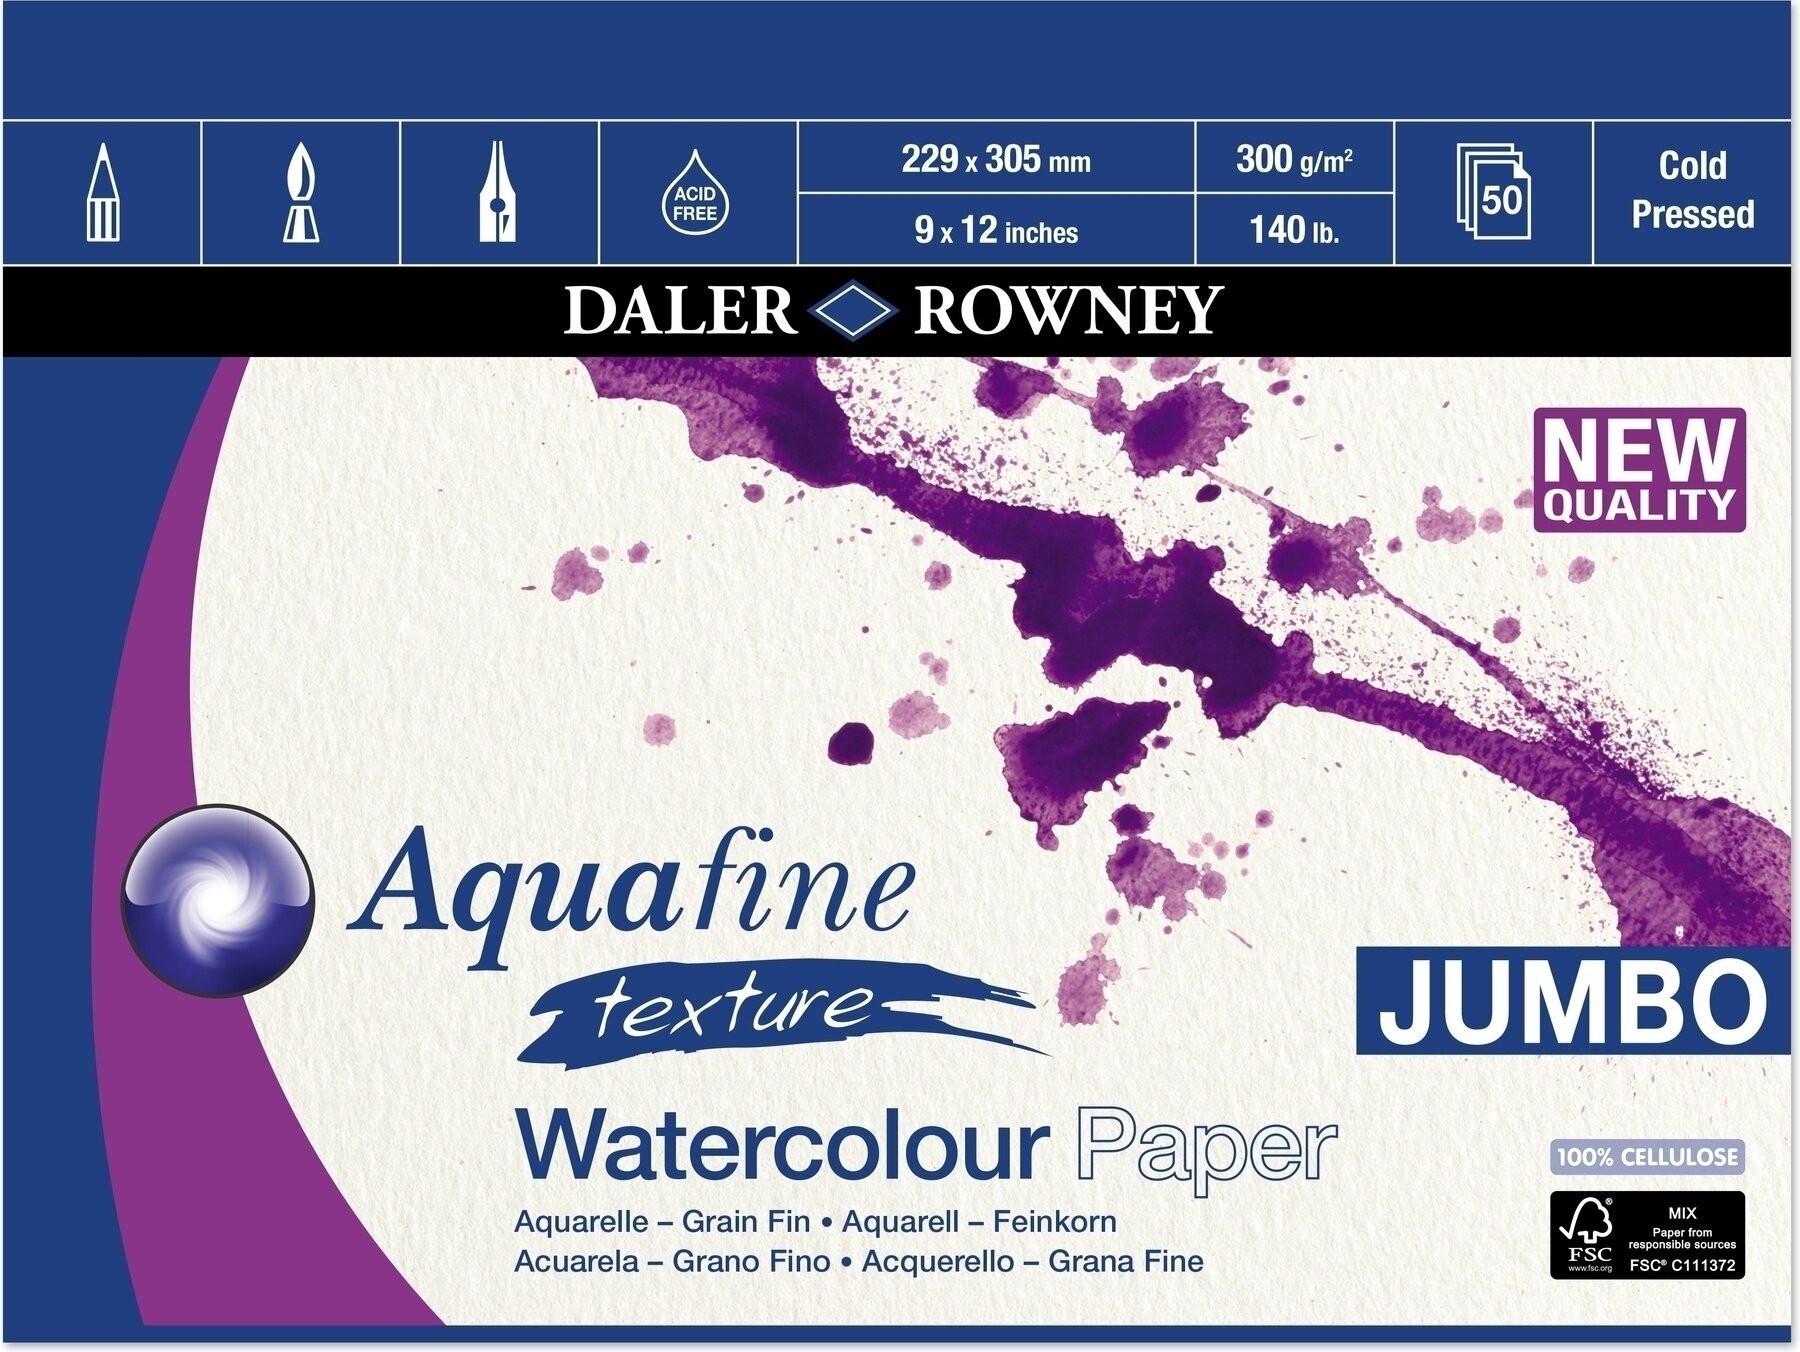 Vázlattömb Daler Rowney Aquafine Texture Watercolour Paper Aquafine 22,9 x 30,5 cm 300 g Vázlattömb